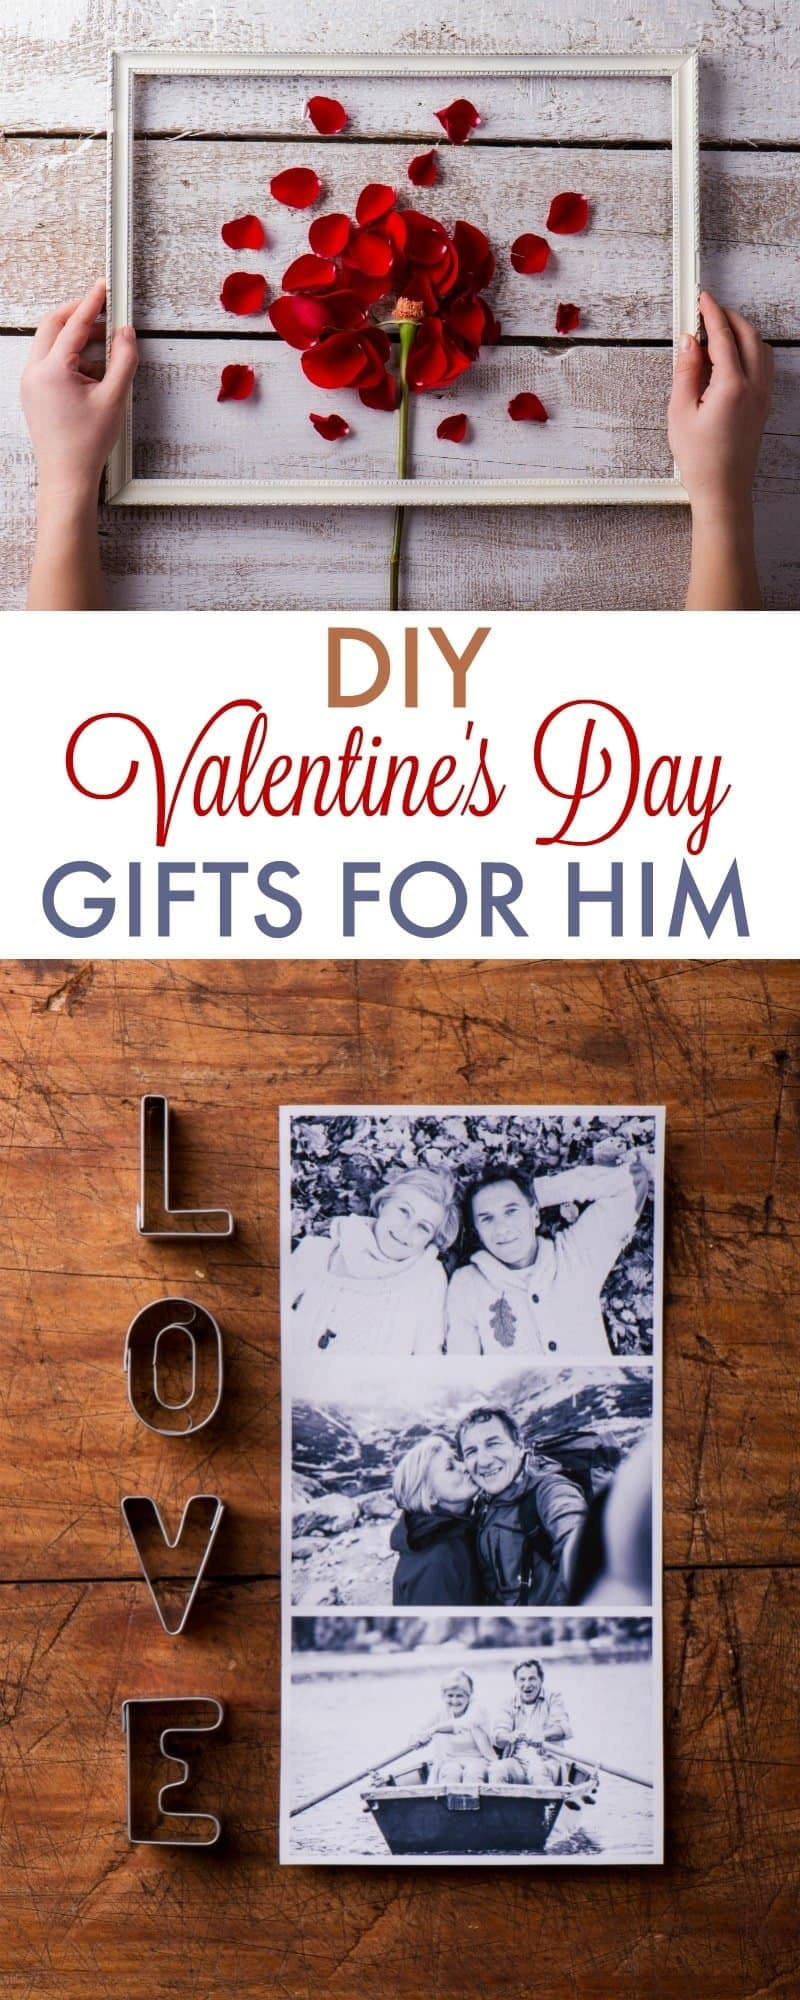 Sentimental Gift Ideas For Boyfriend
 Top 25 Cute Sentimental Gift Ideas for Boyfriend – Home